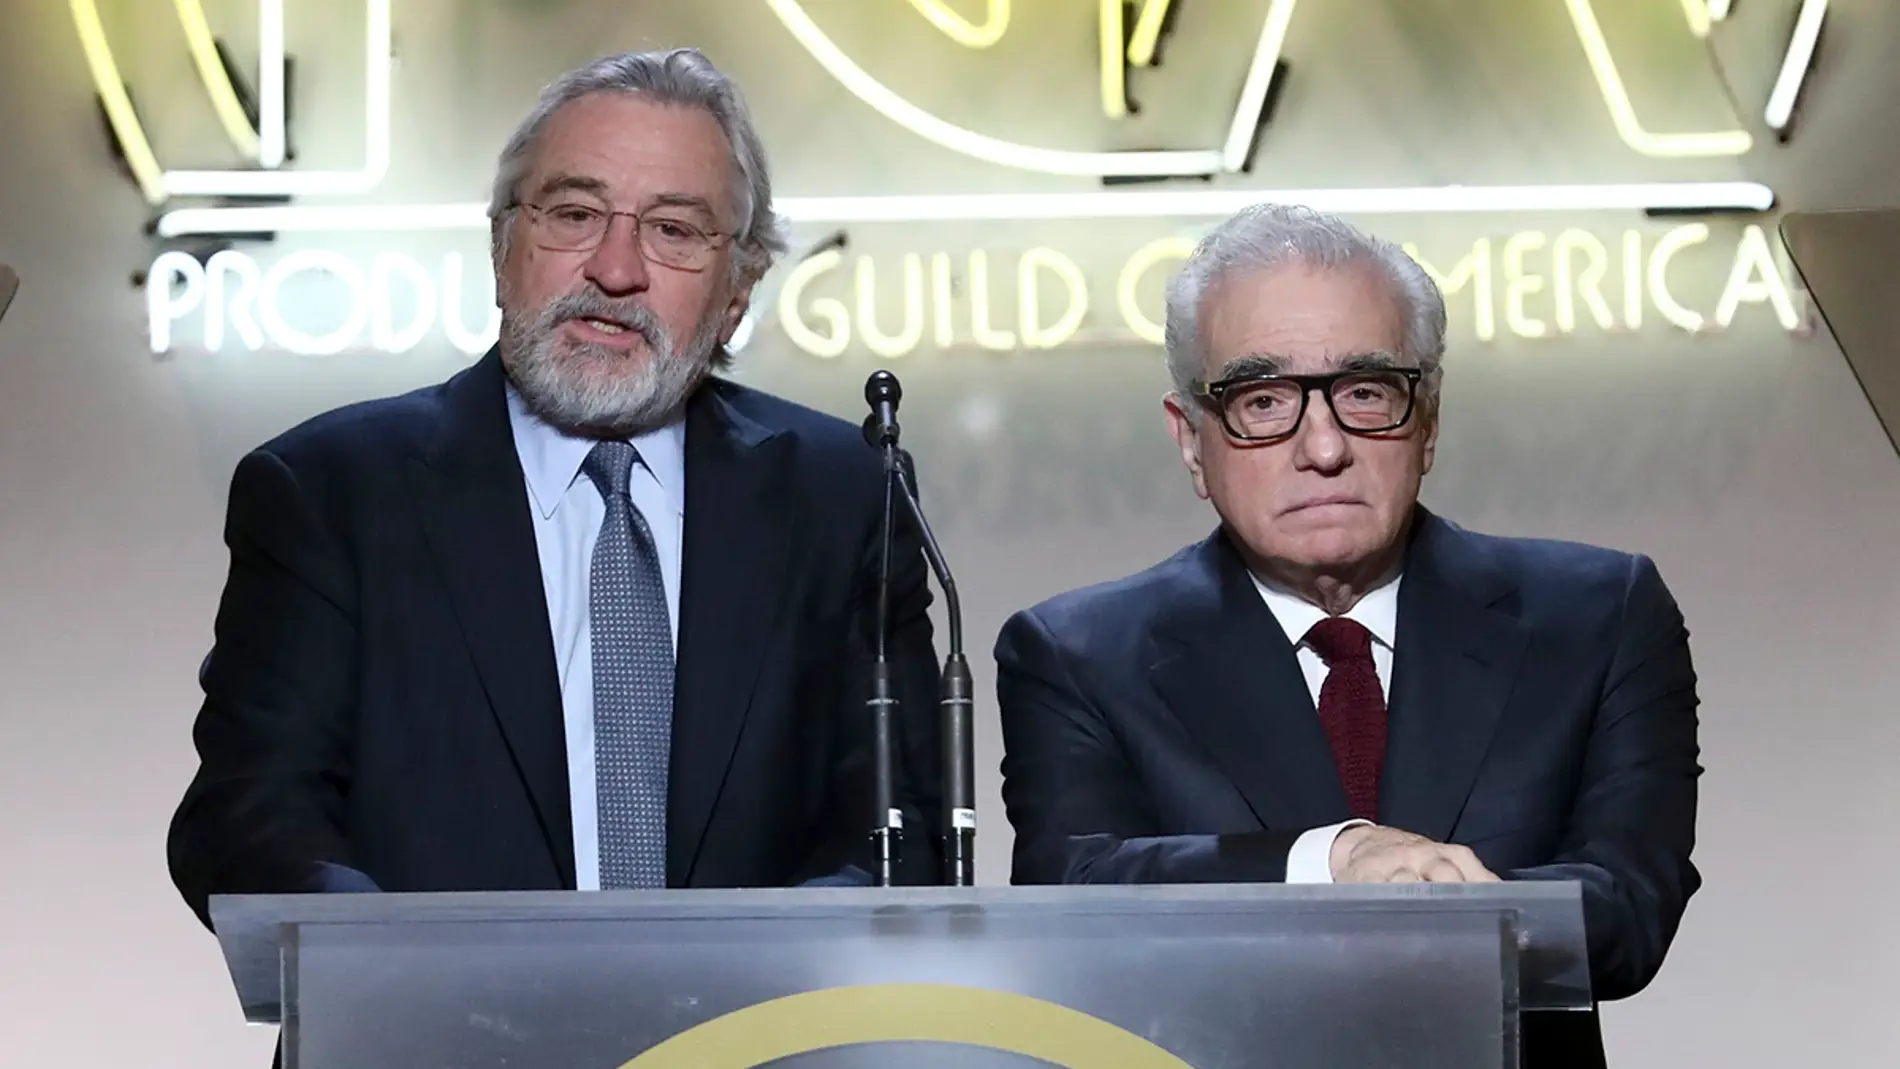 Robert de Niro y Martin Scorsese